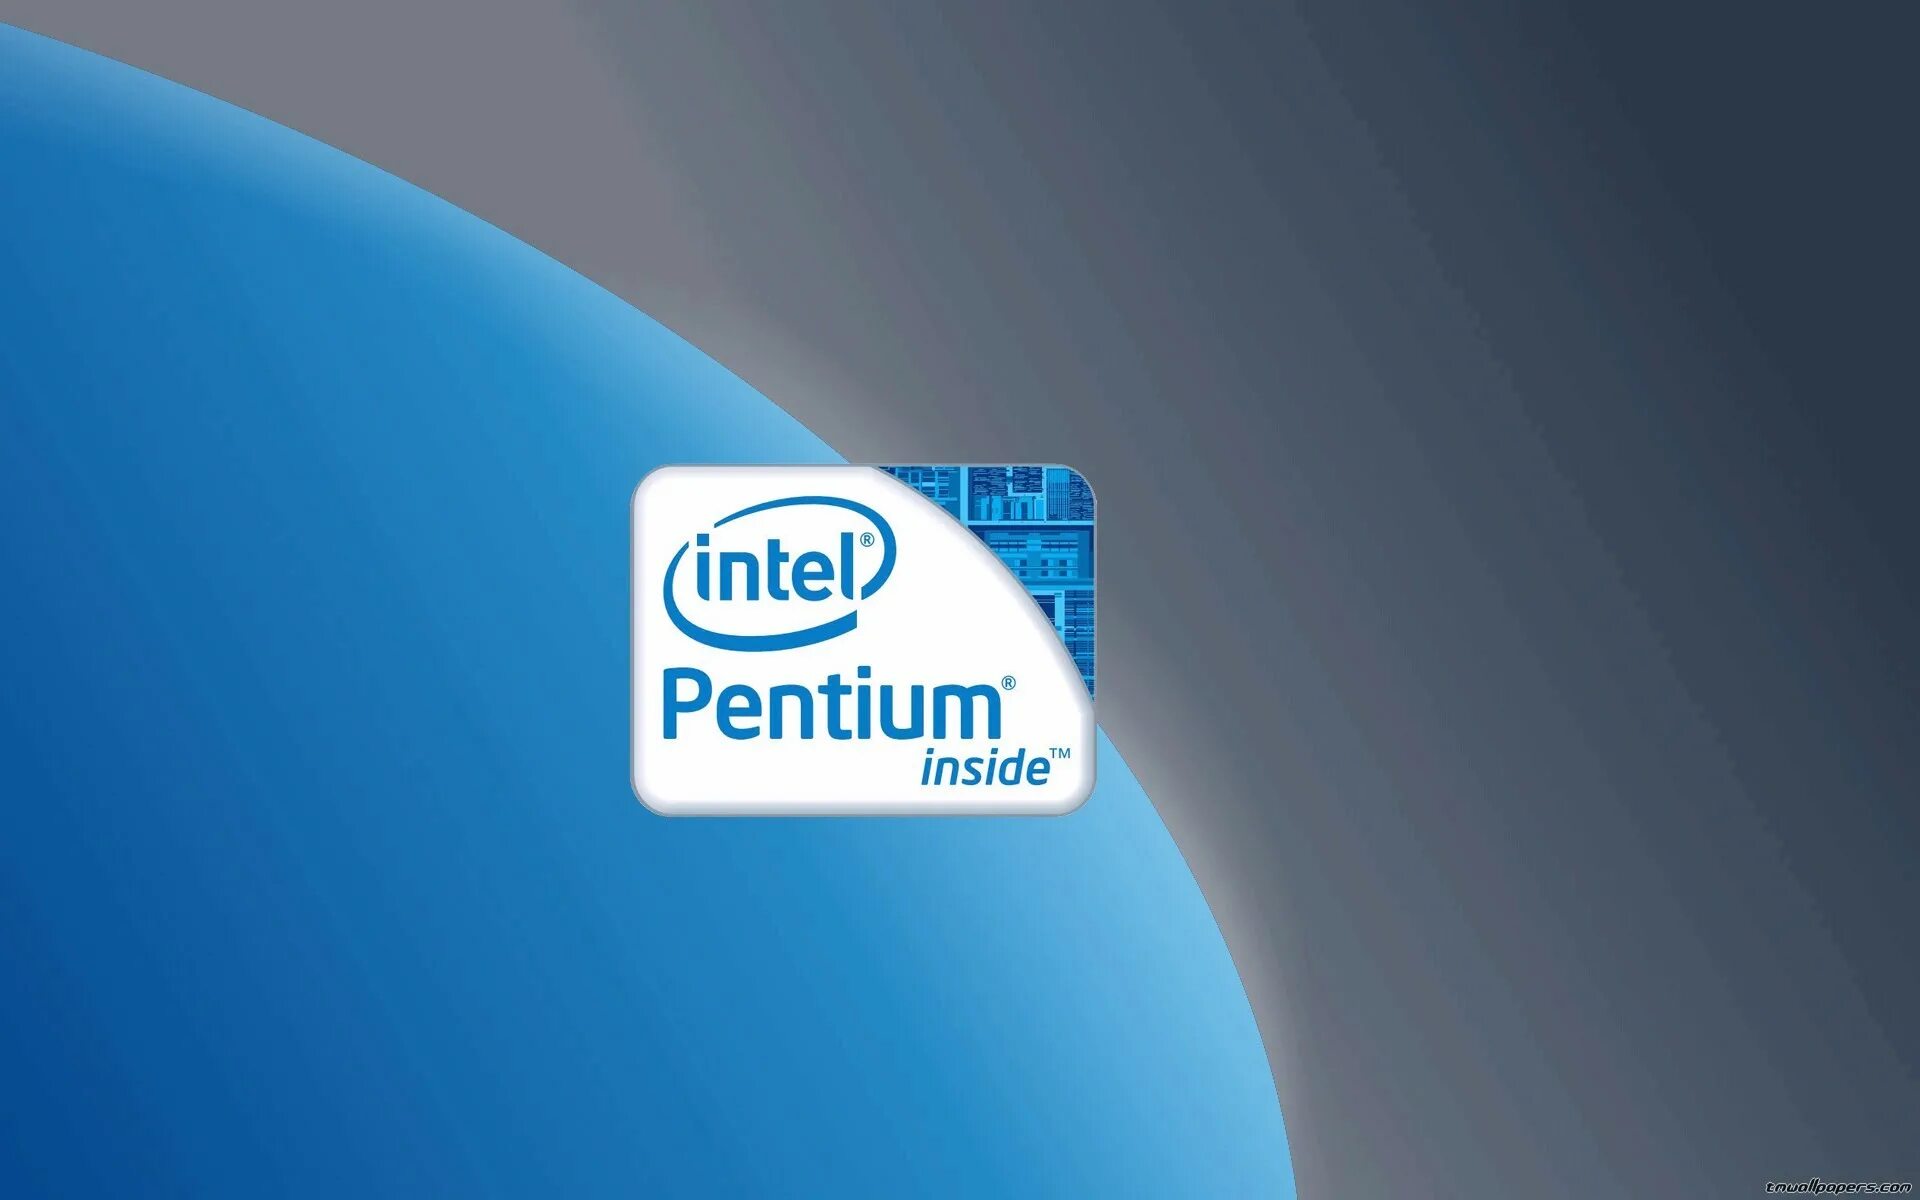 Интел. Интел пентиум инсайд. Intel Pentium inside. Логотип Intel inside. Intel оф сайт